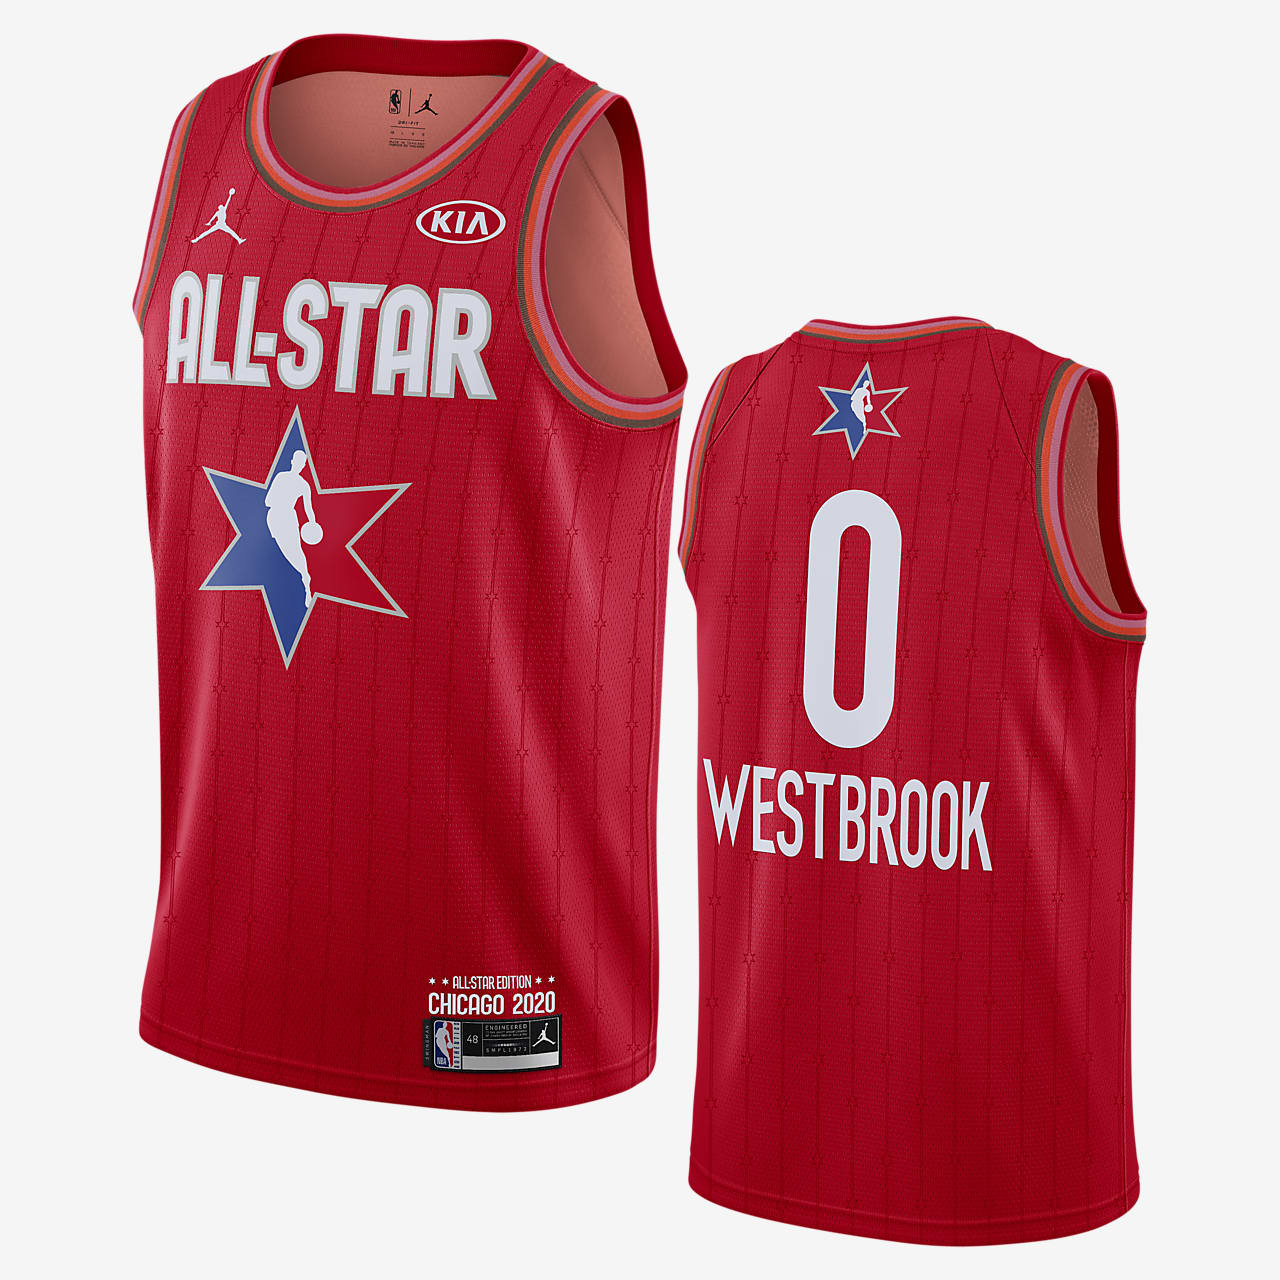 westbrook jersey all star